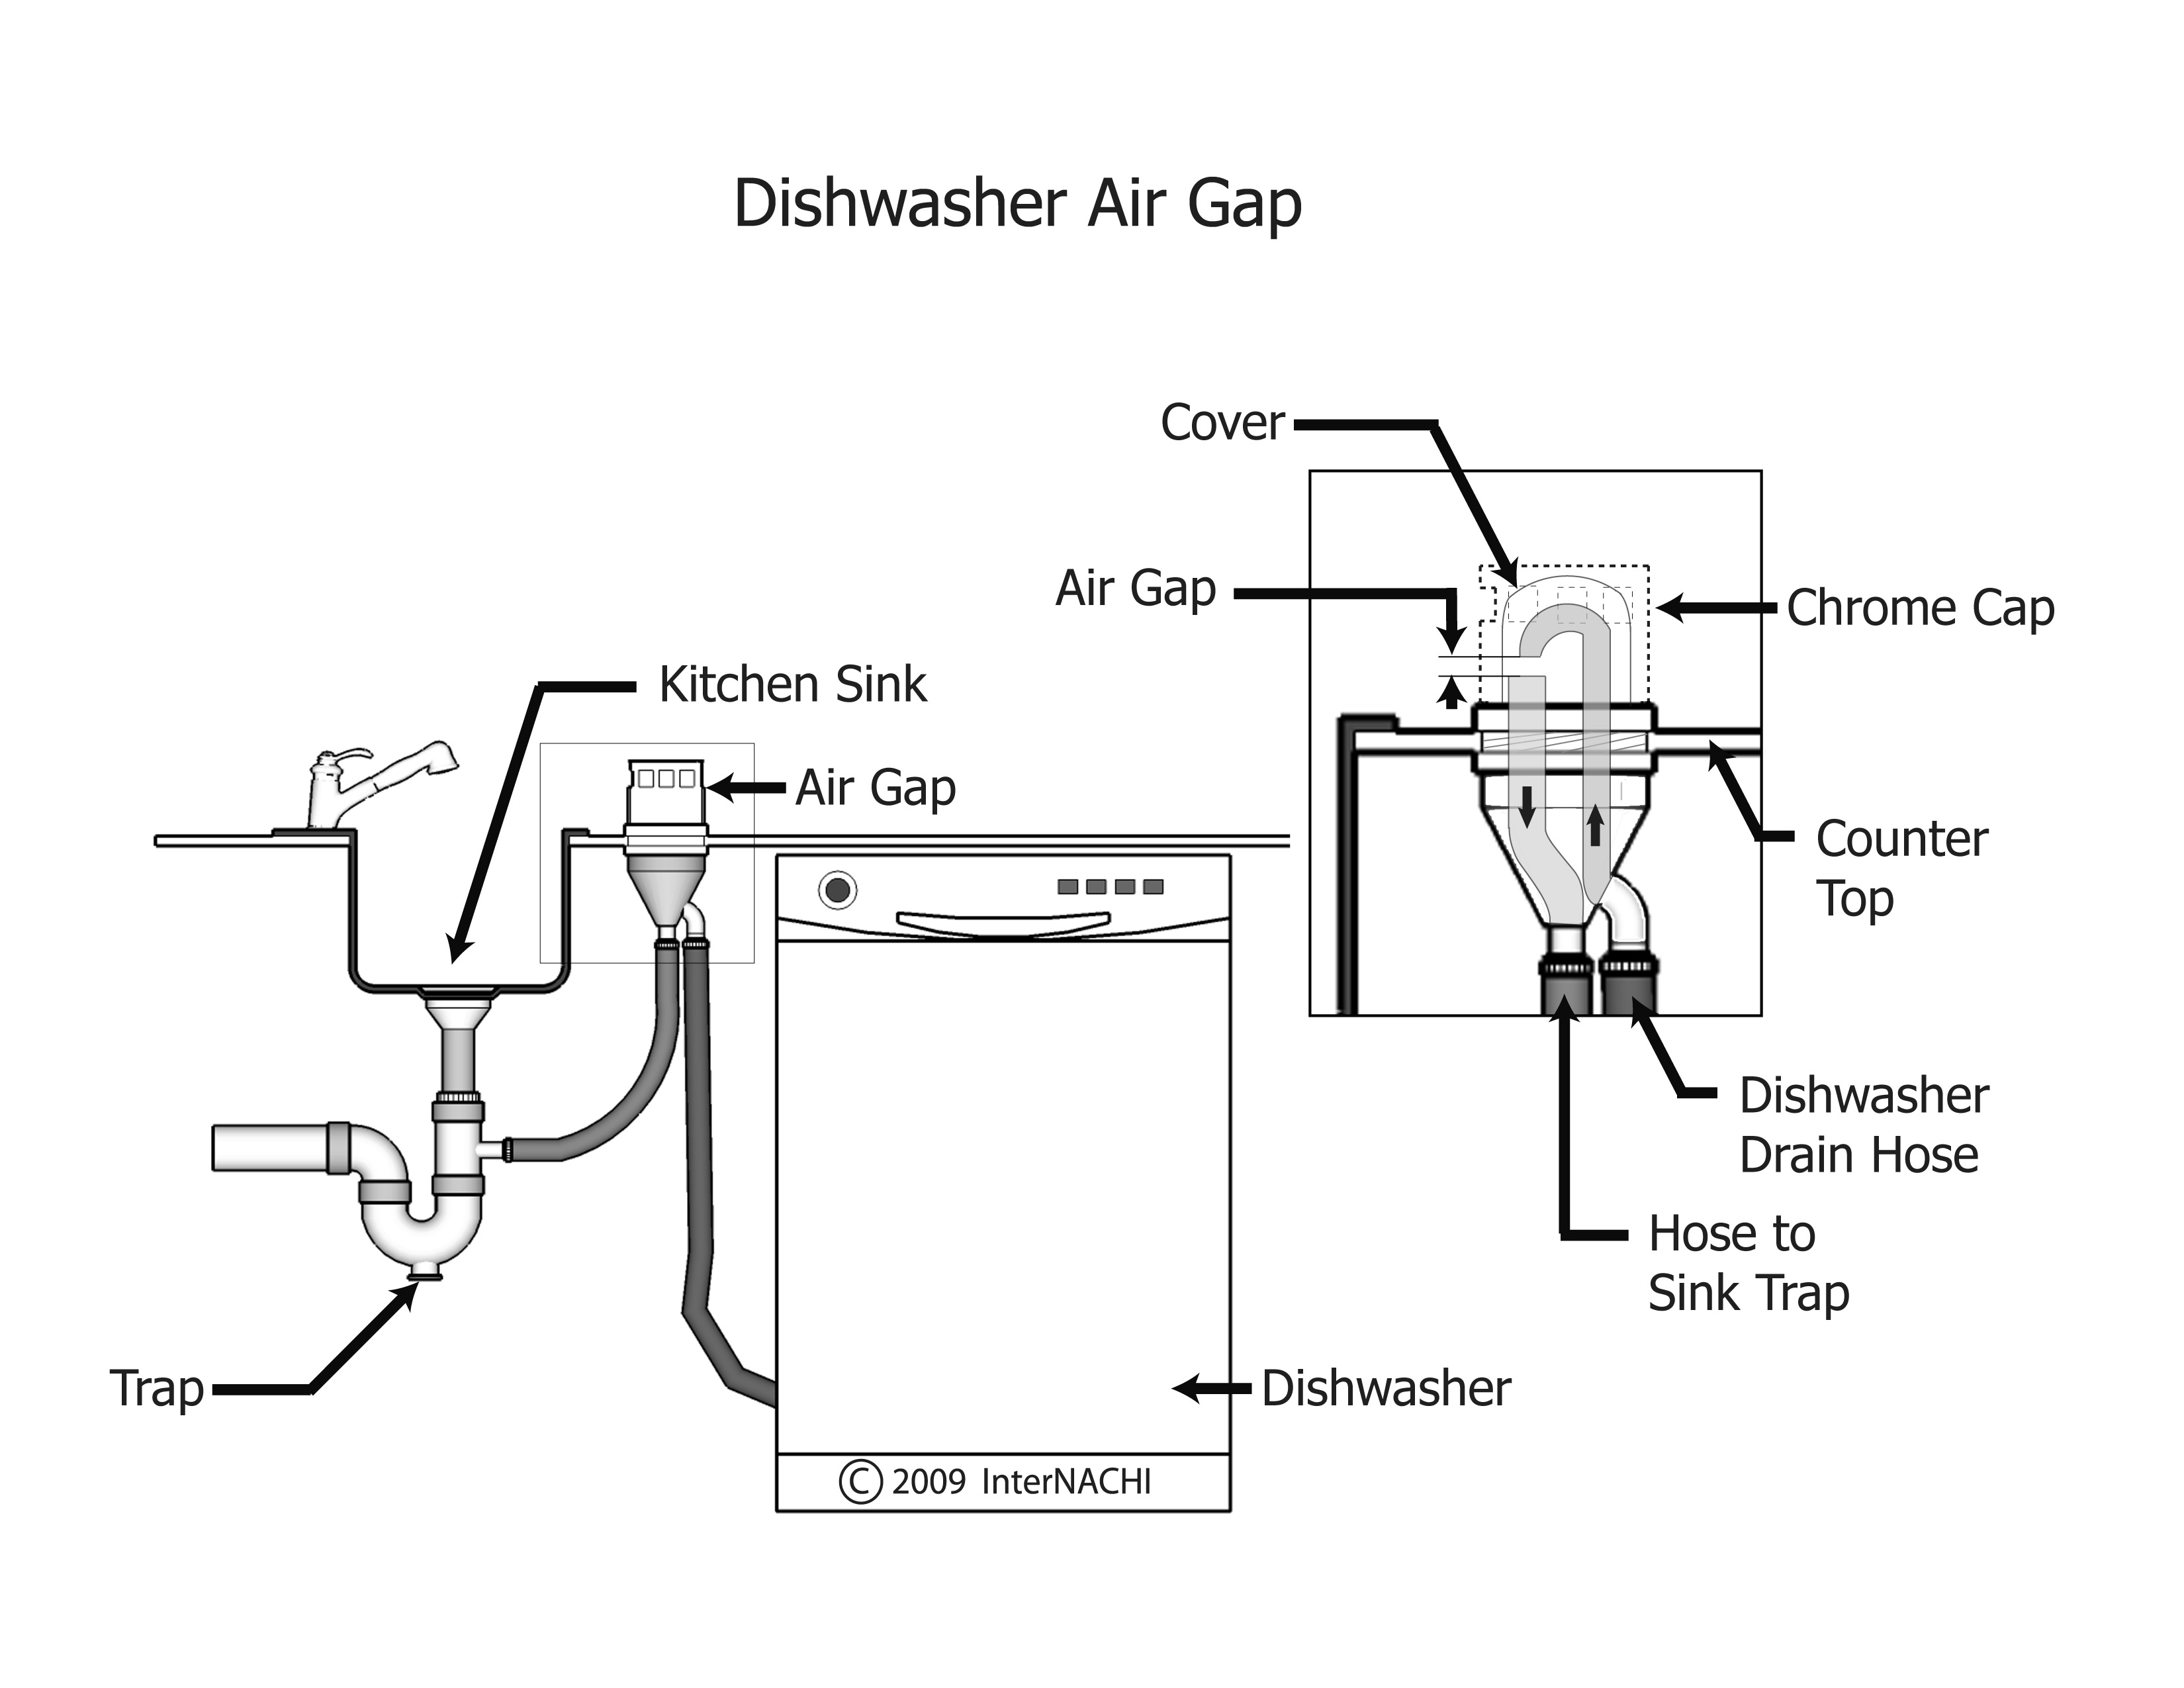 dishwasher-air-gap-bw.jpg